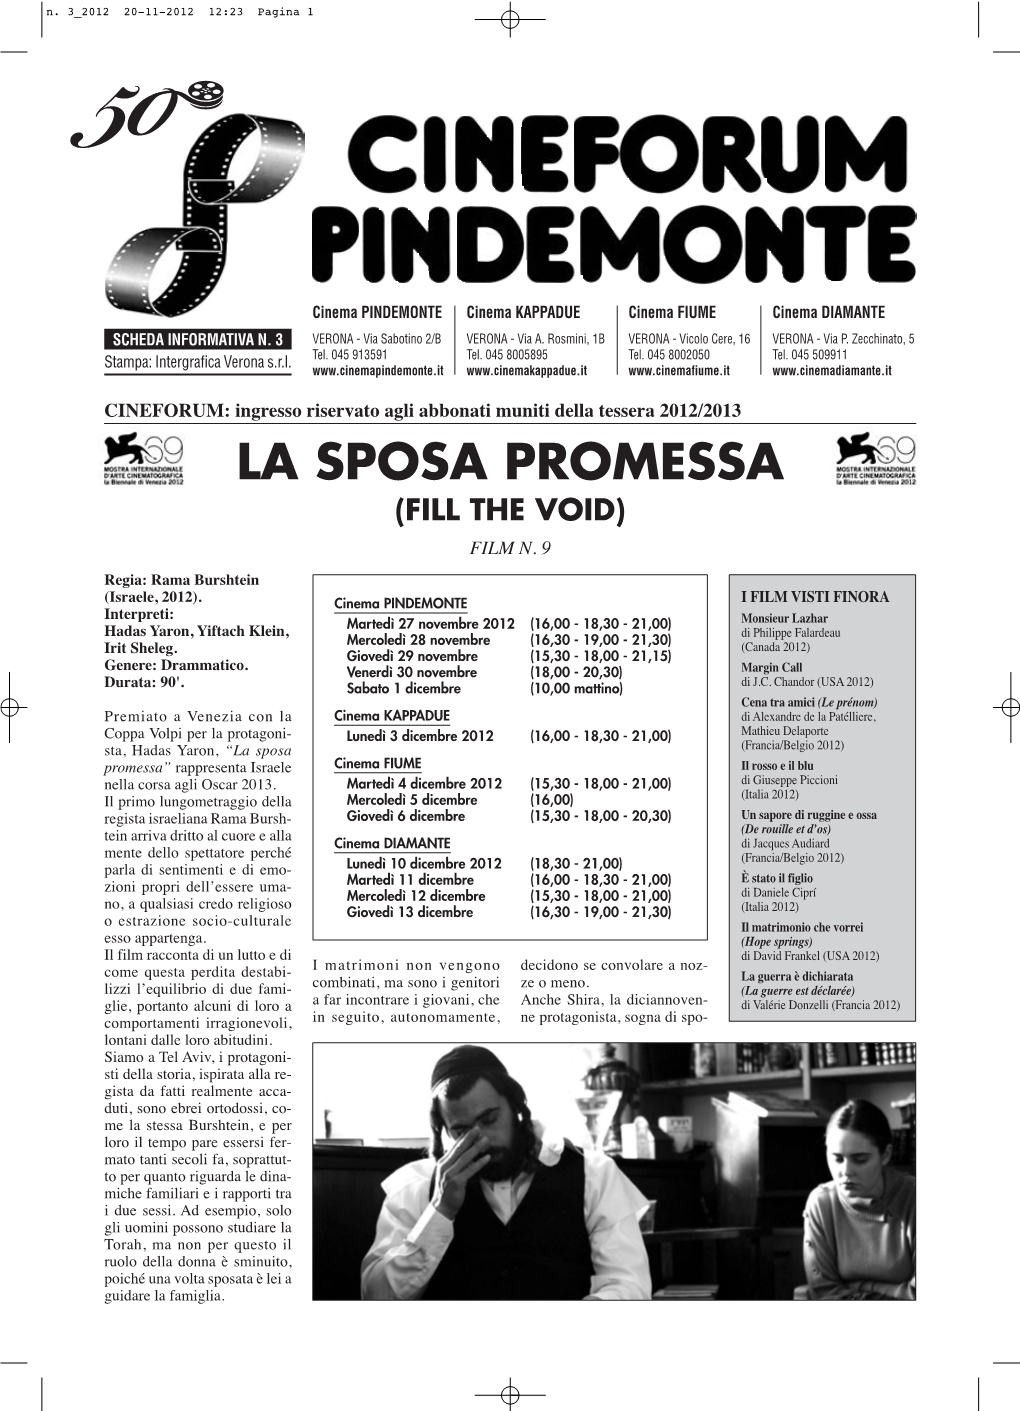 La Sposa Promessa (Fill the Void) Film N